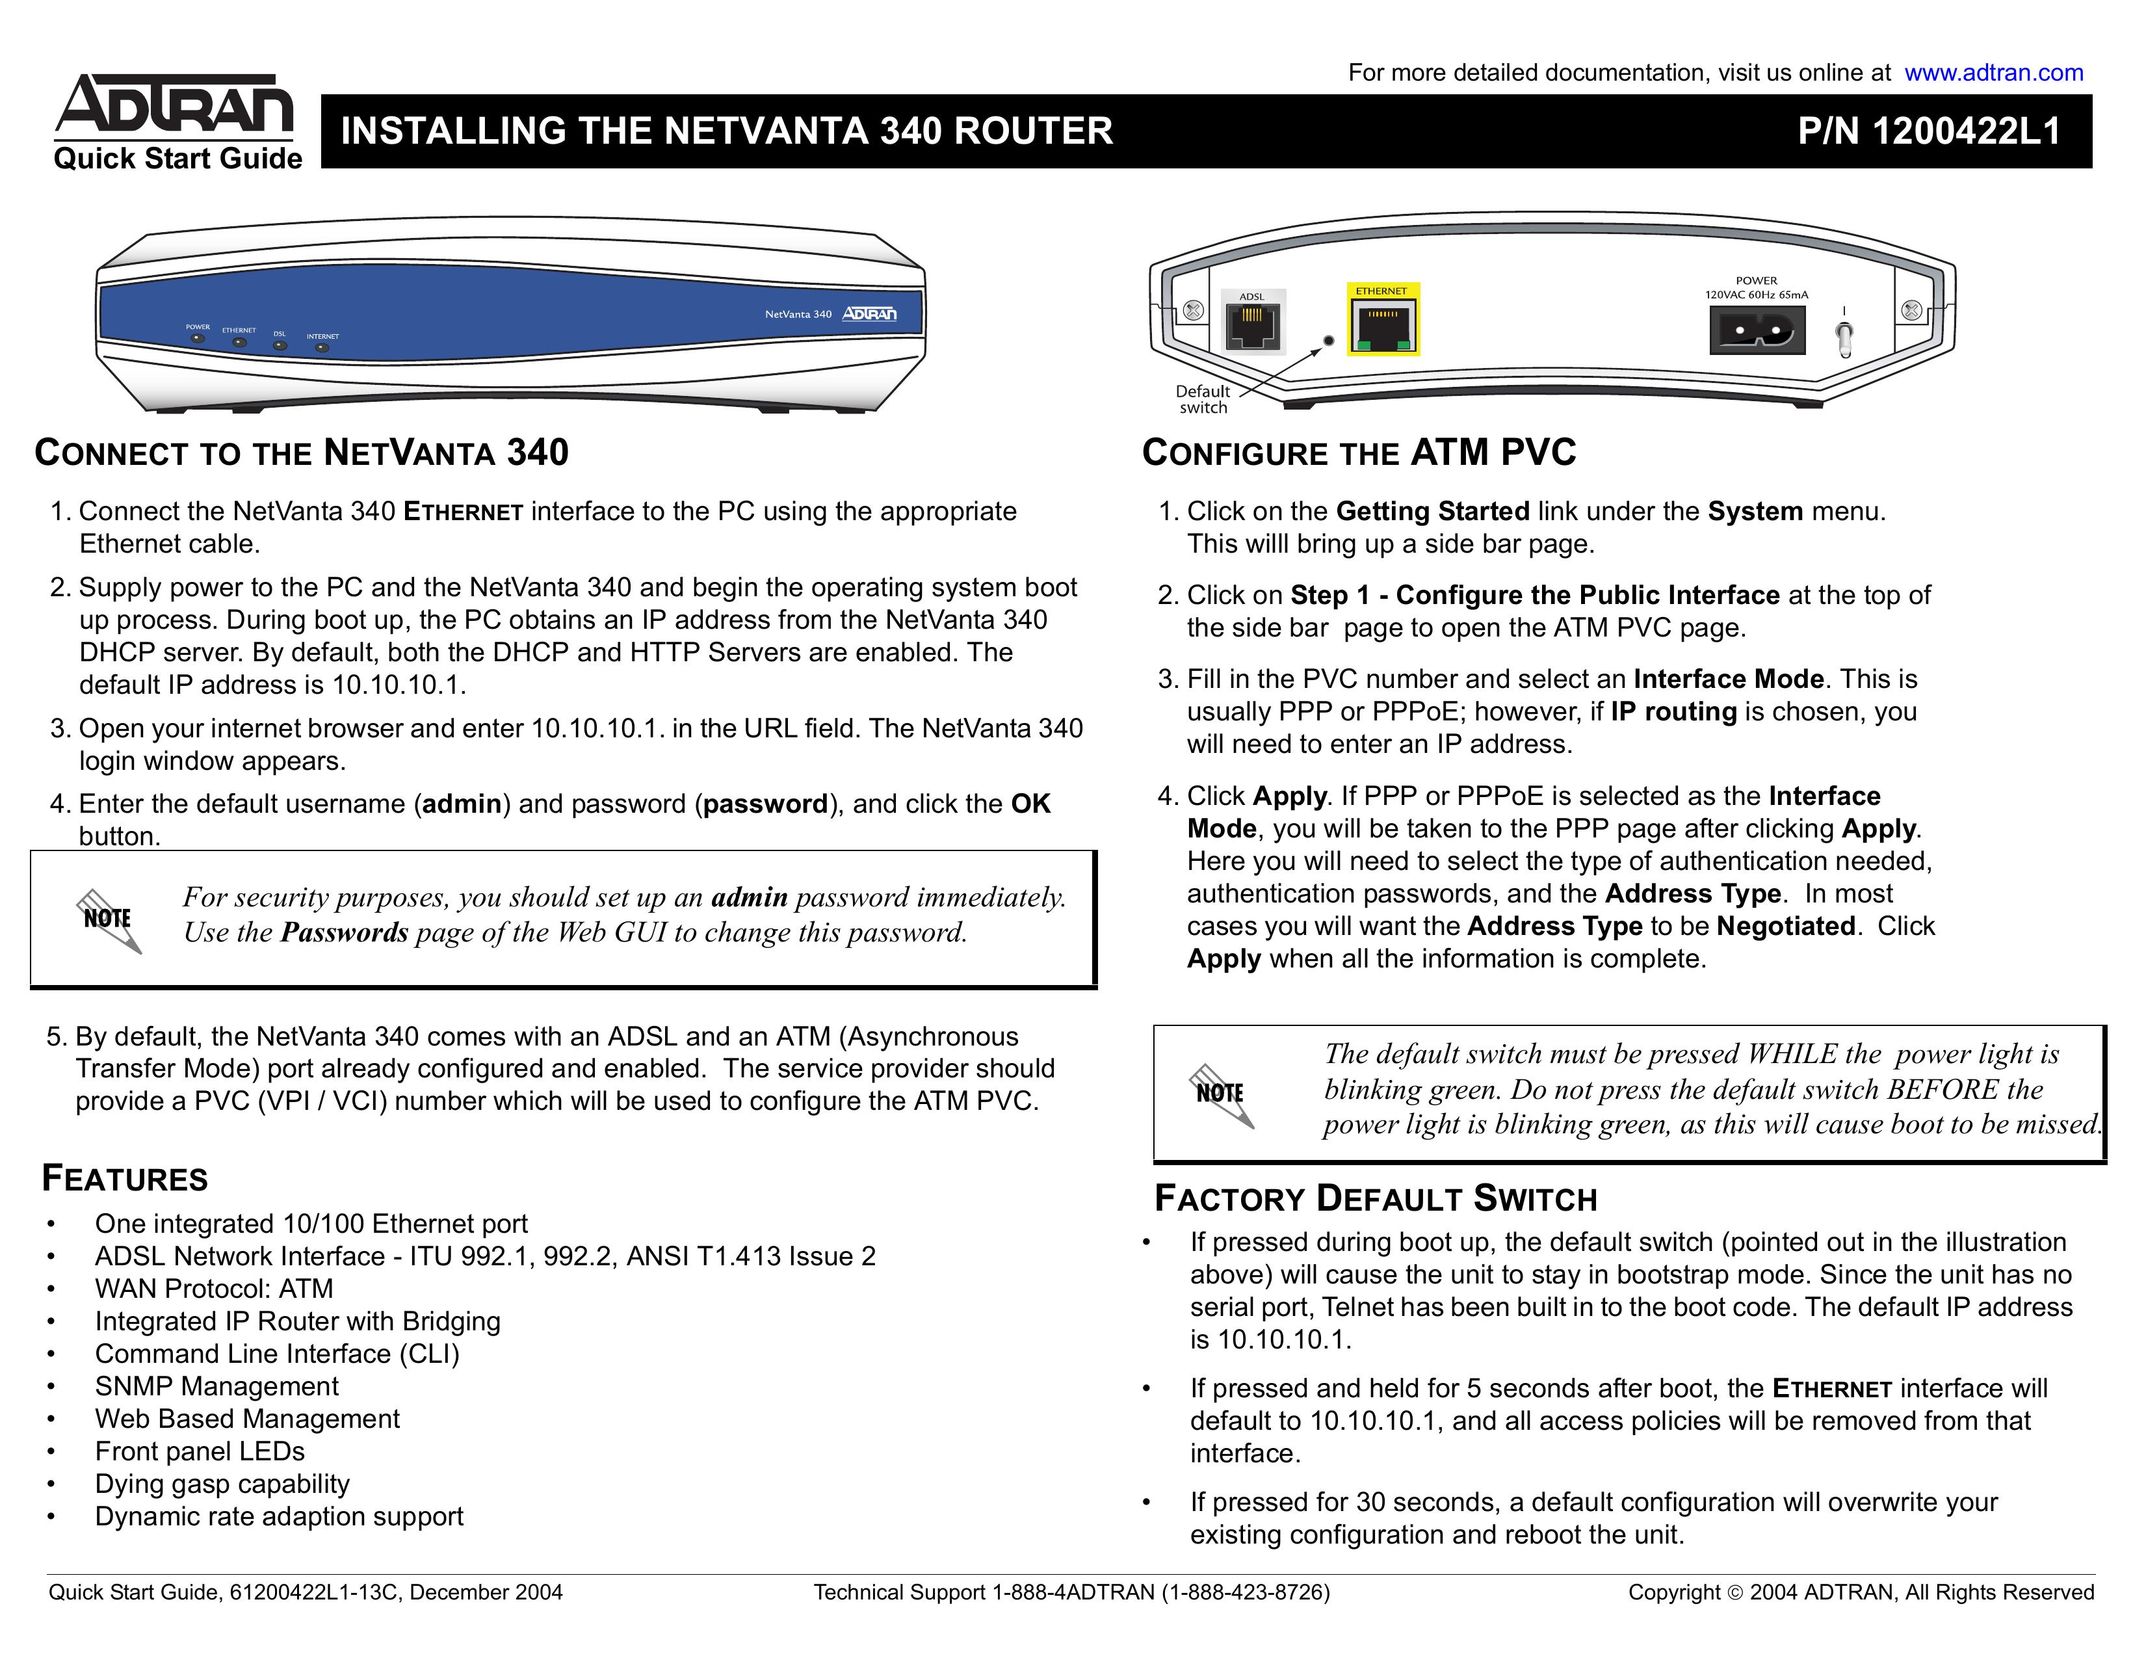 ADTRAN 340 Network Router User Manual